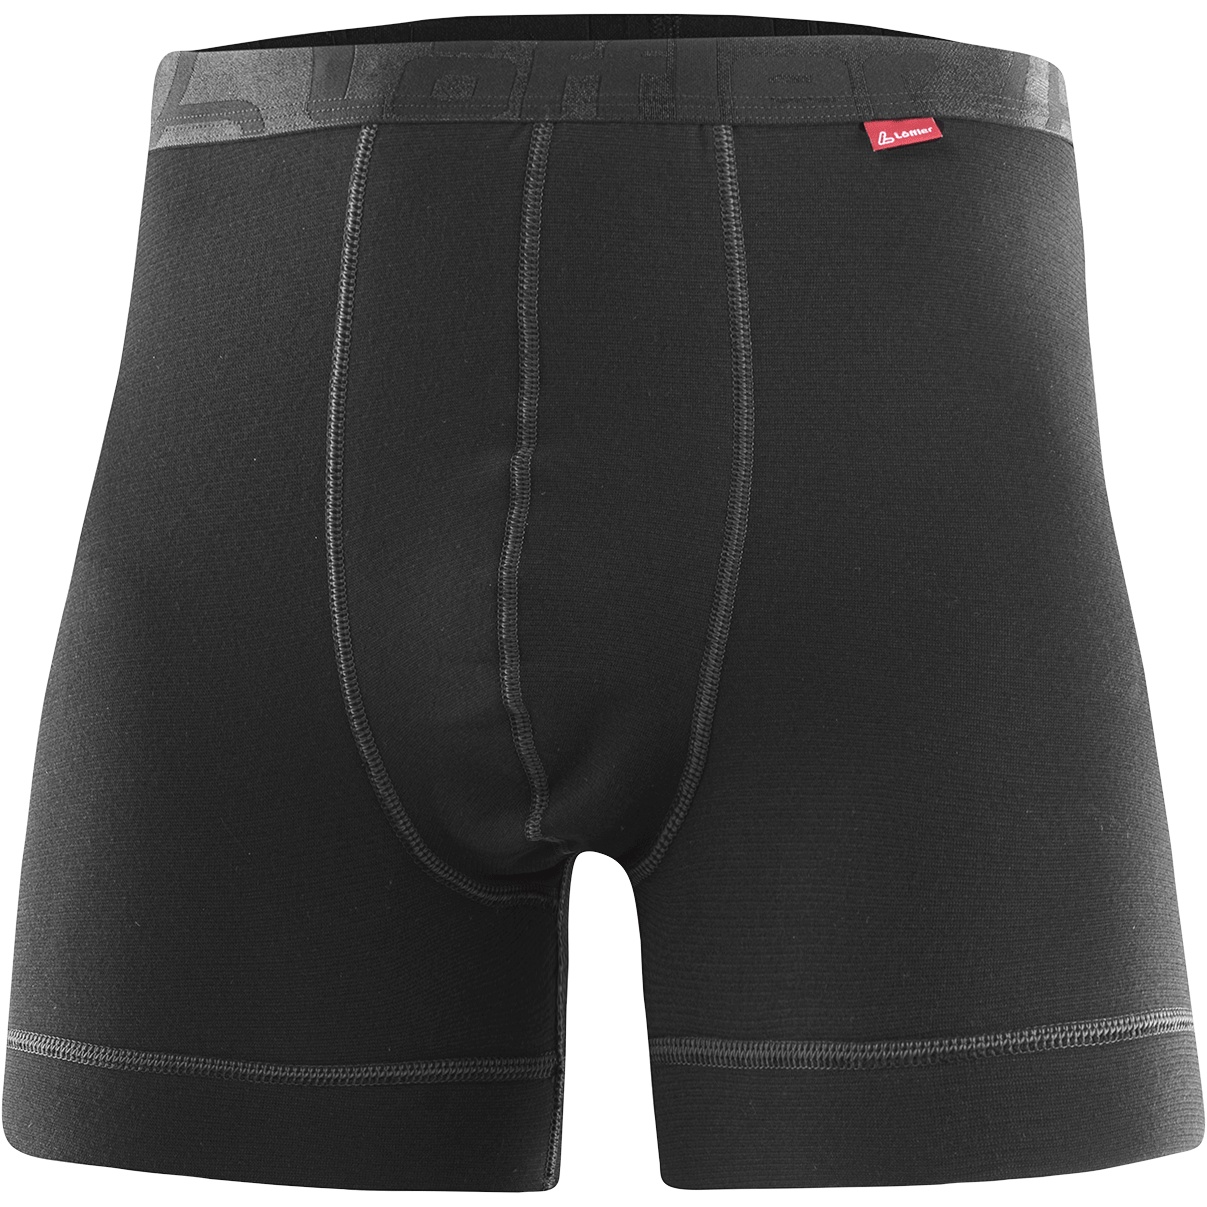 Löffler Transtex® Warm Boxershorts Men - black 990 | BIKE24